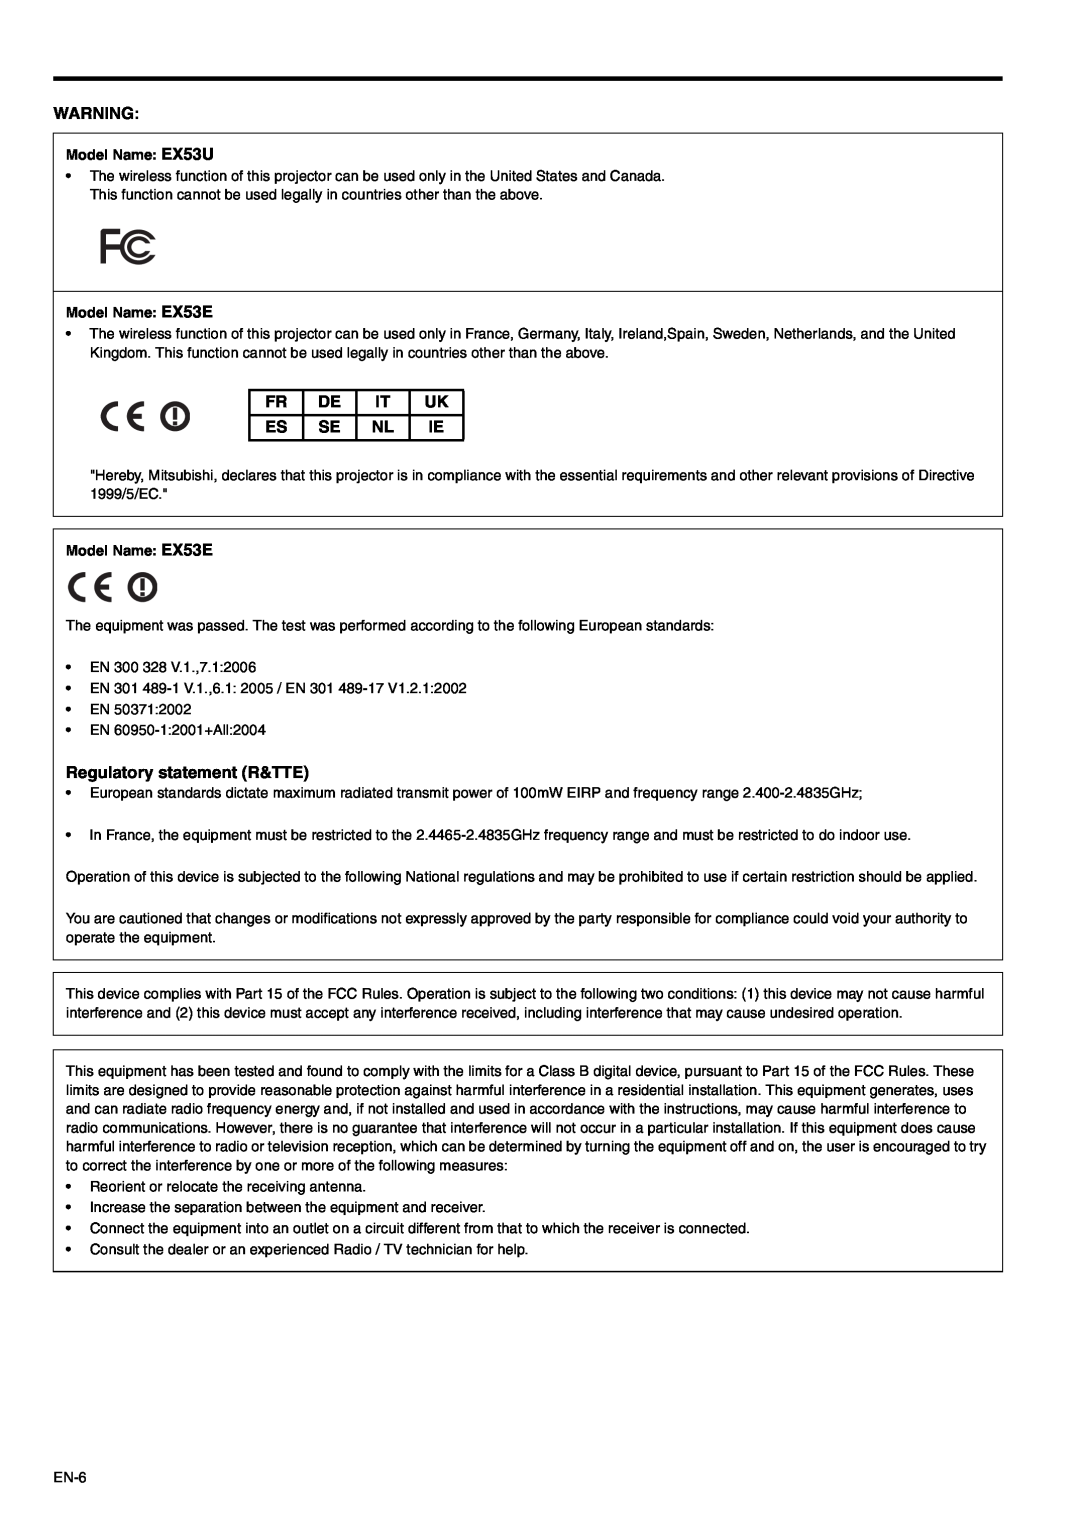 Mitsubishi Electronics user manual Regulatory statement R&TTE, Model Name EX53U, Model Name EX53E 